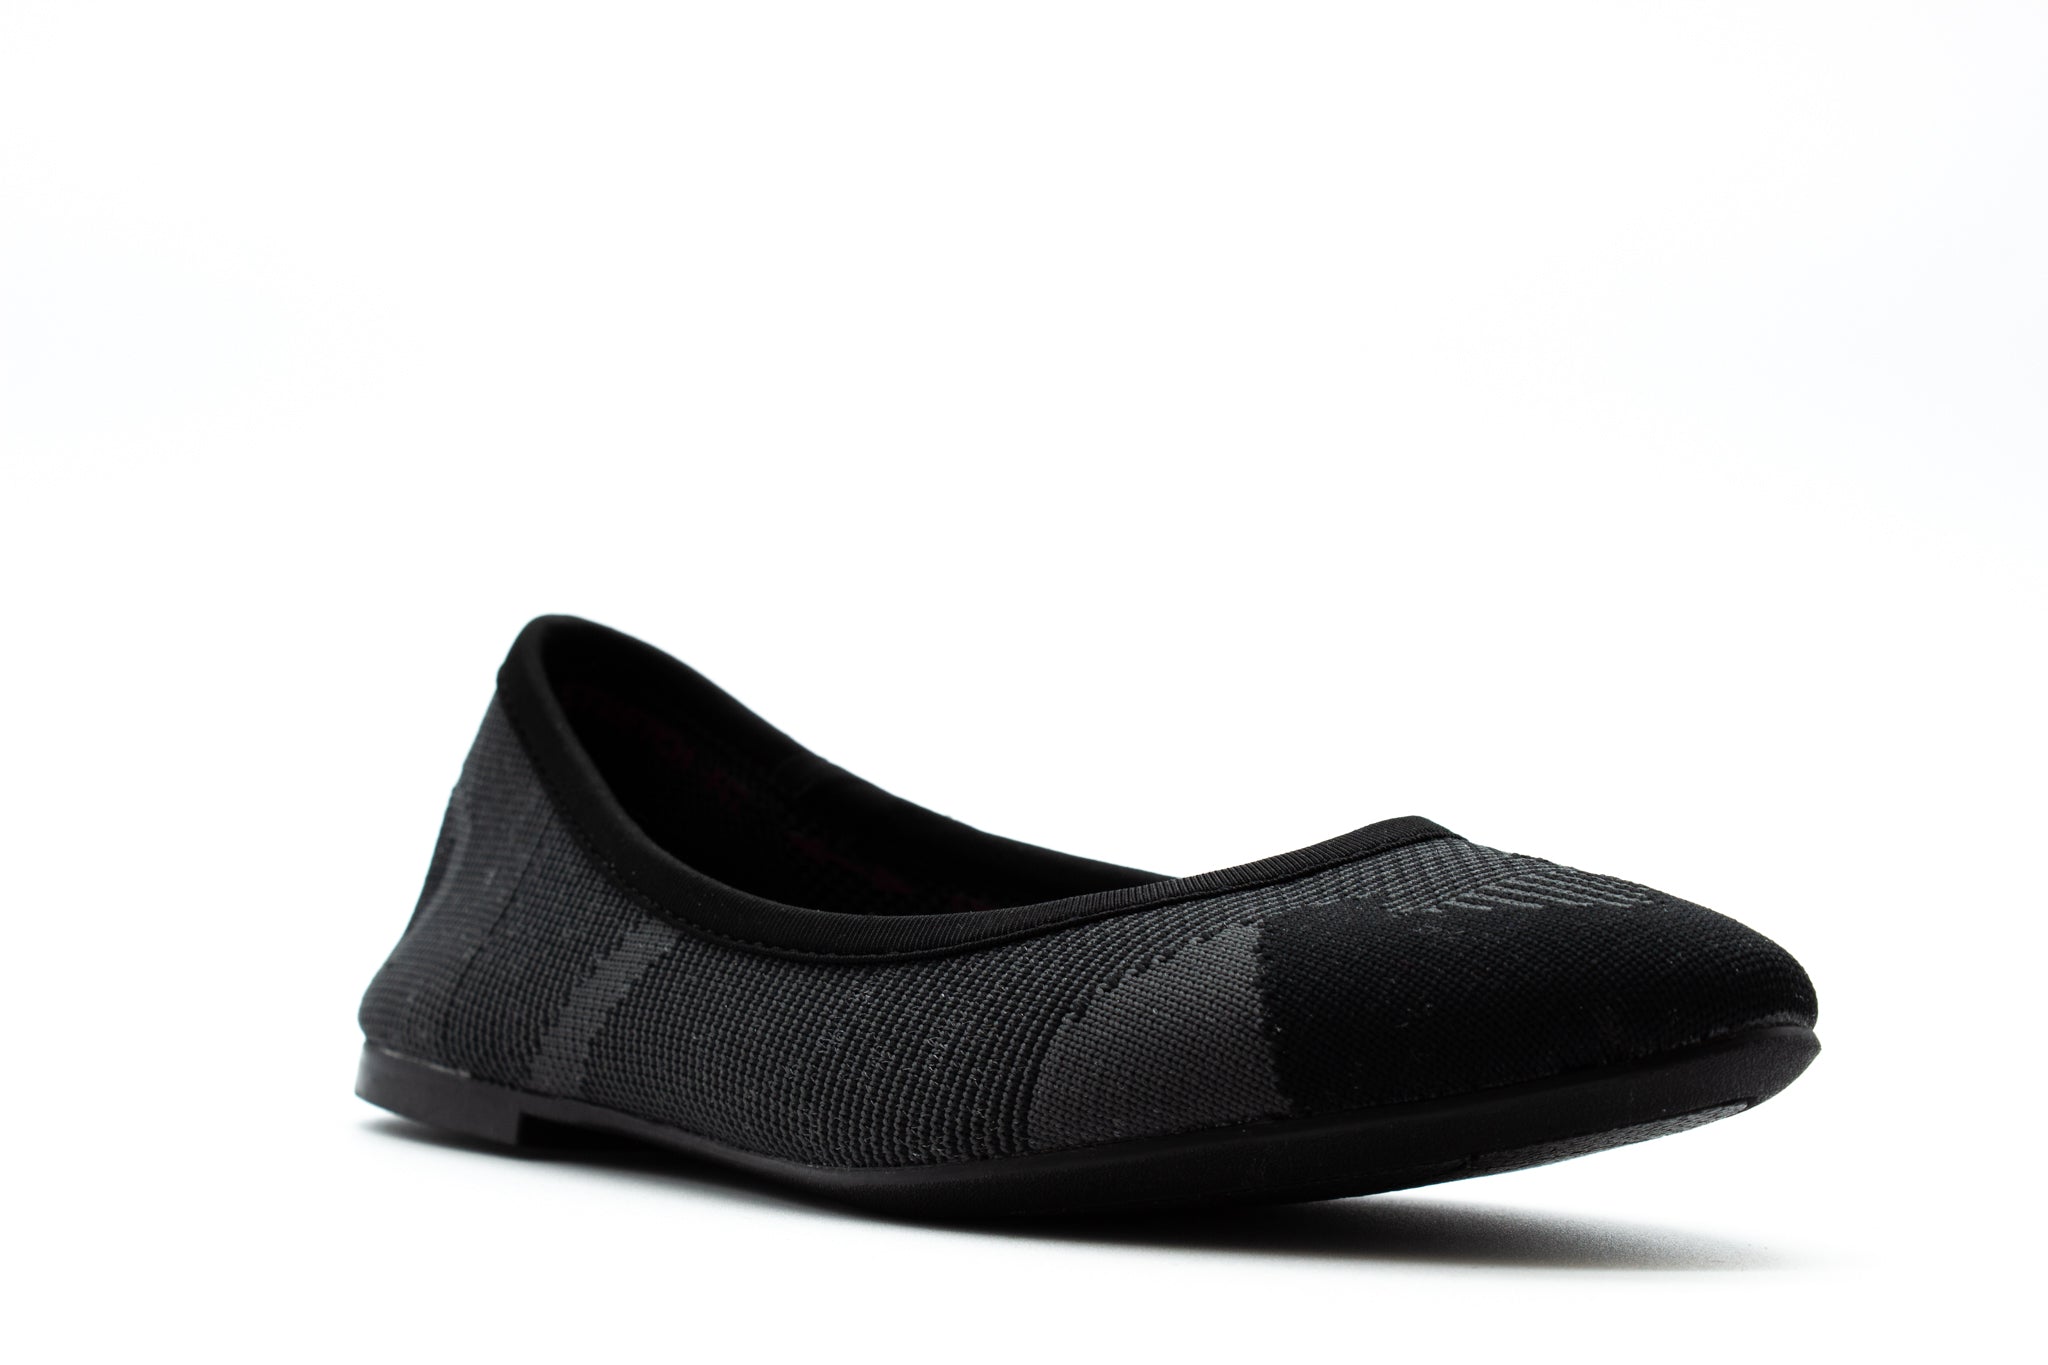 Skechers Cleo-Wham Ballet Flats Black/Charcoal